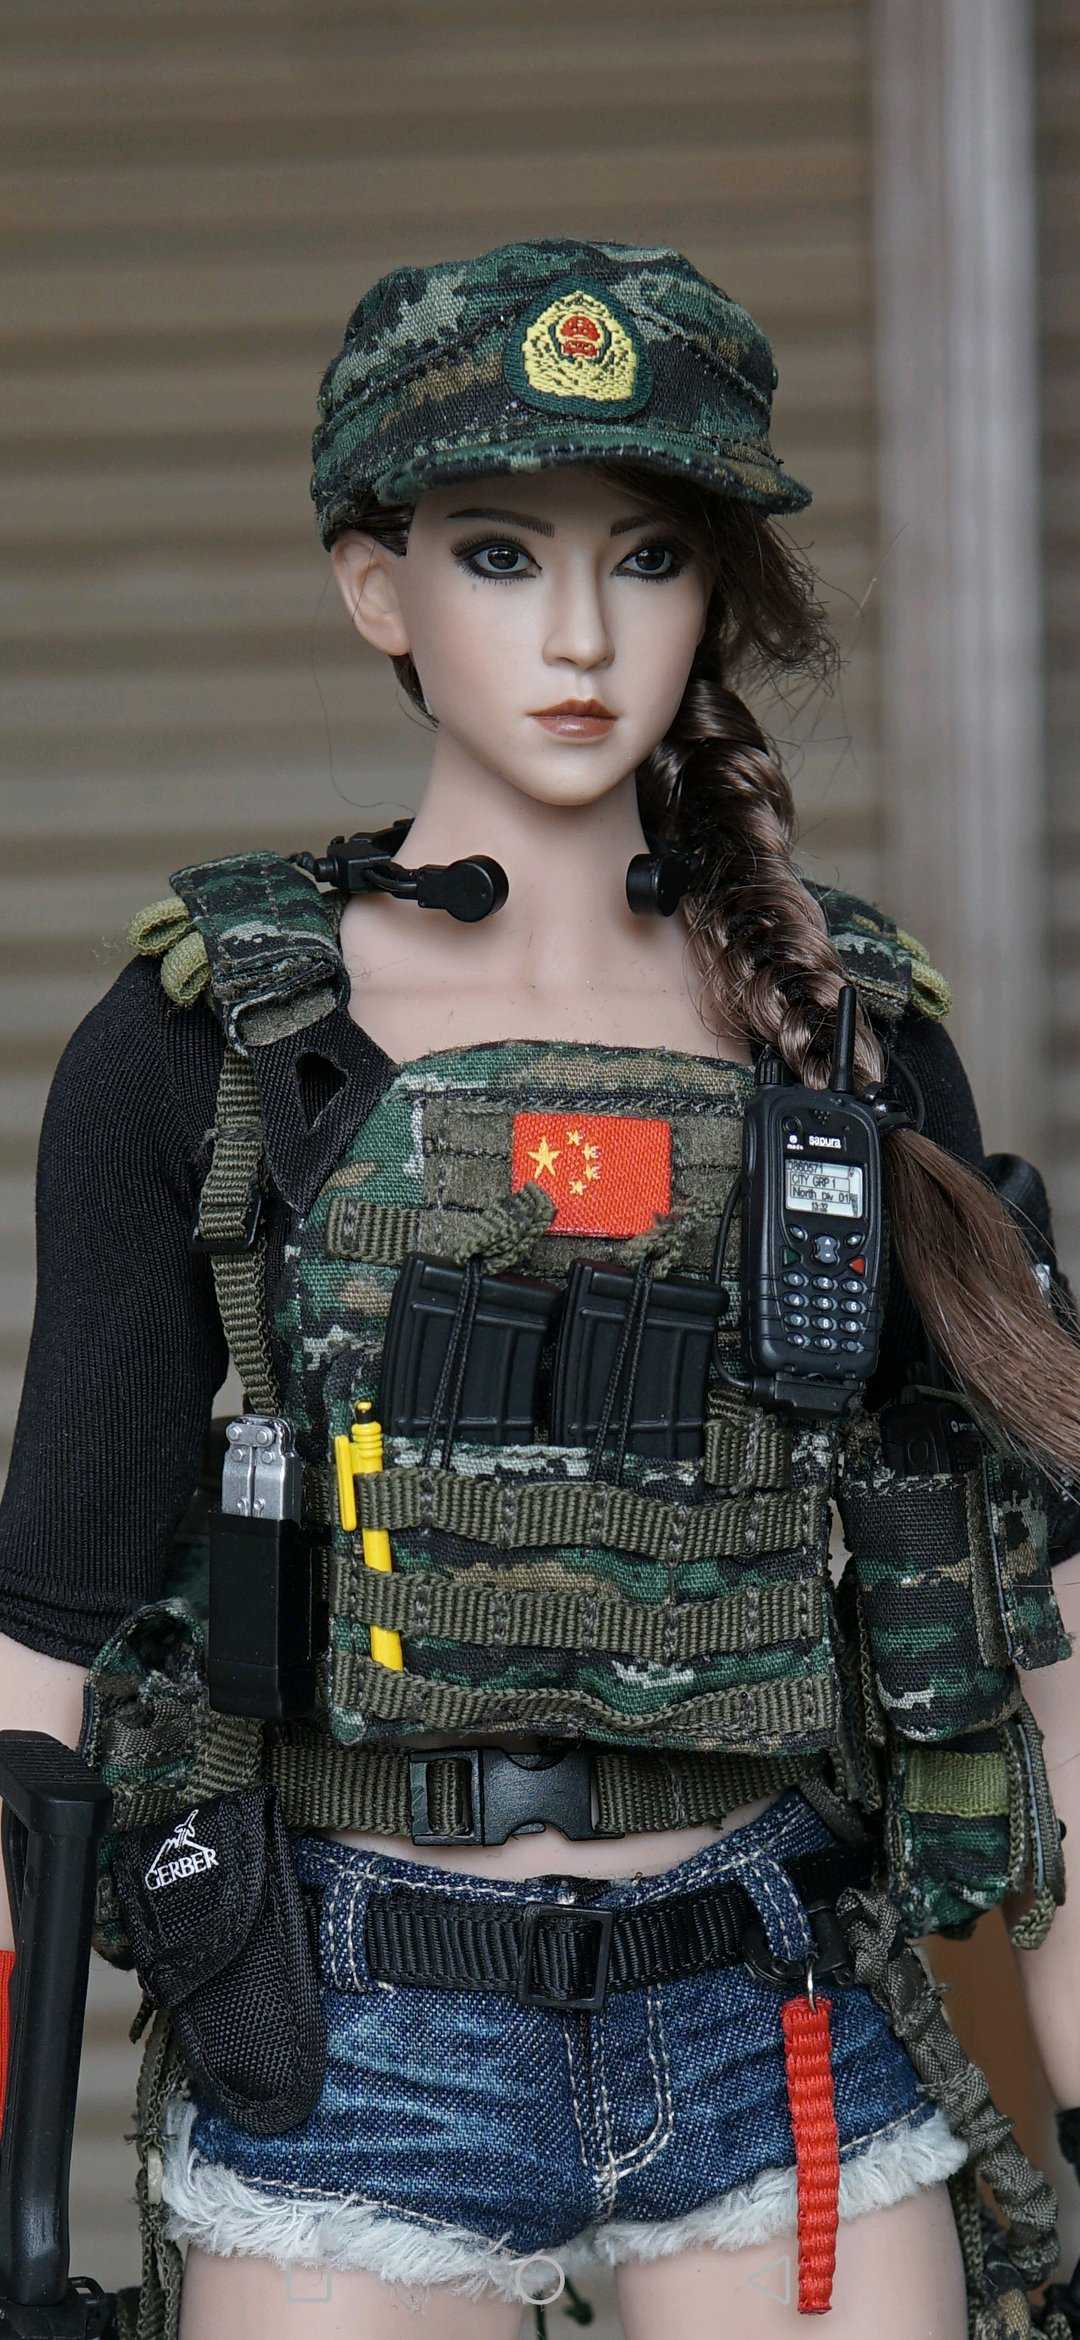 https://figround.com/assets/img/2019-12-05-chinese-female-soldier-1-6-scale-figure-diy/chinese-female-soldier-1-6-scale-figure-diy.jpg